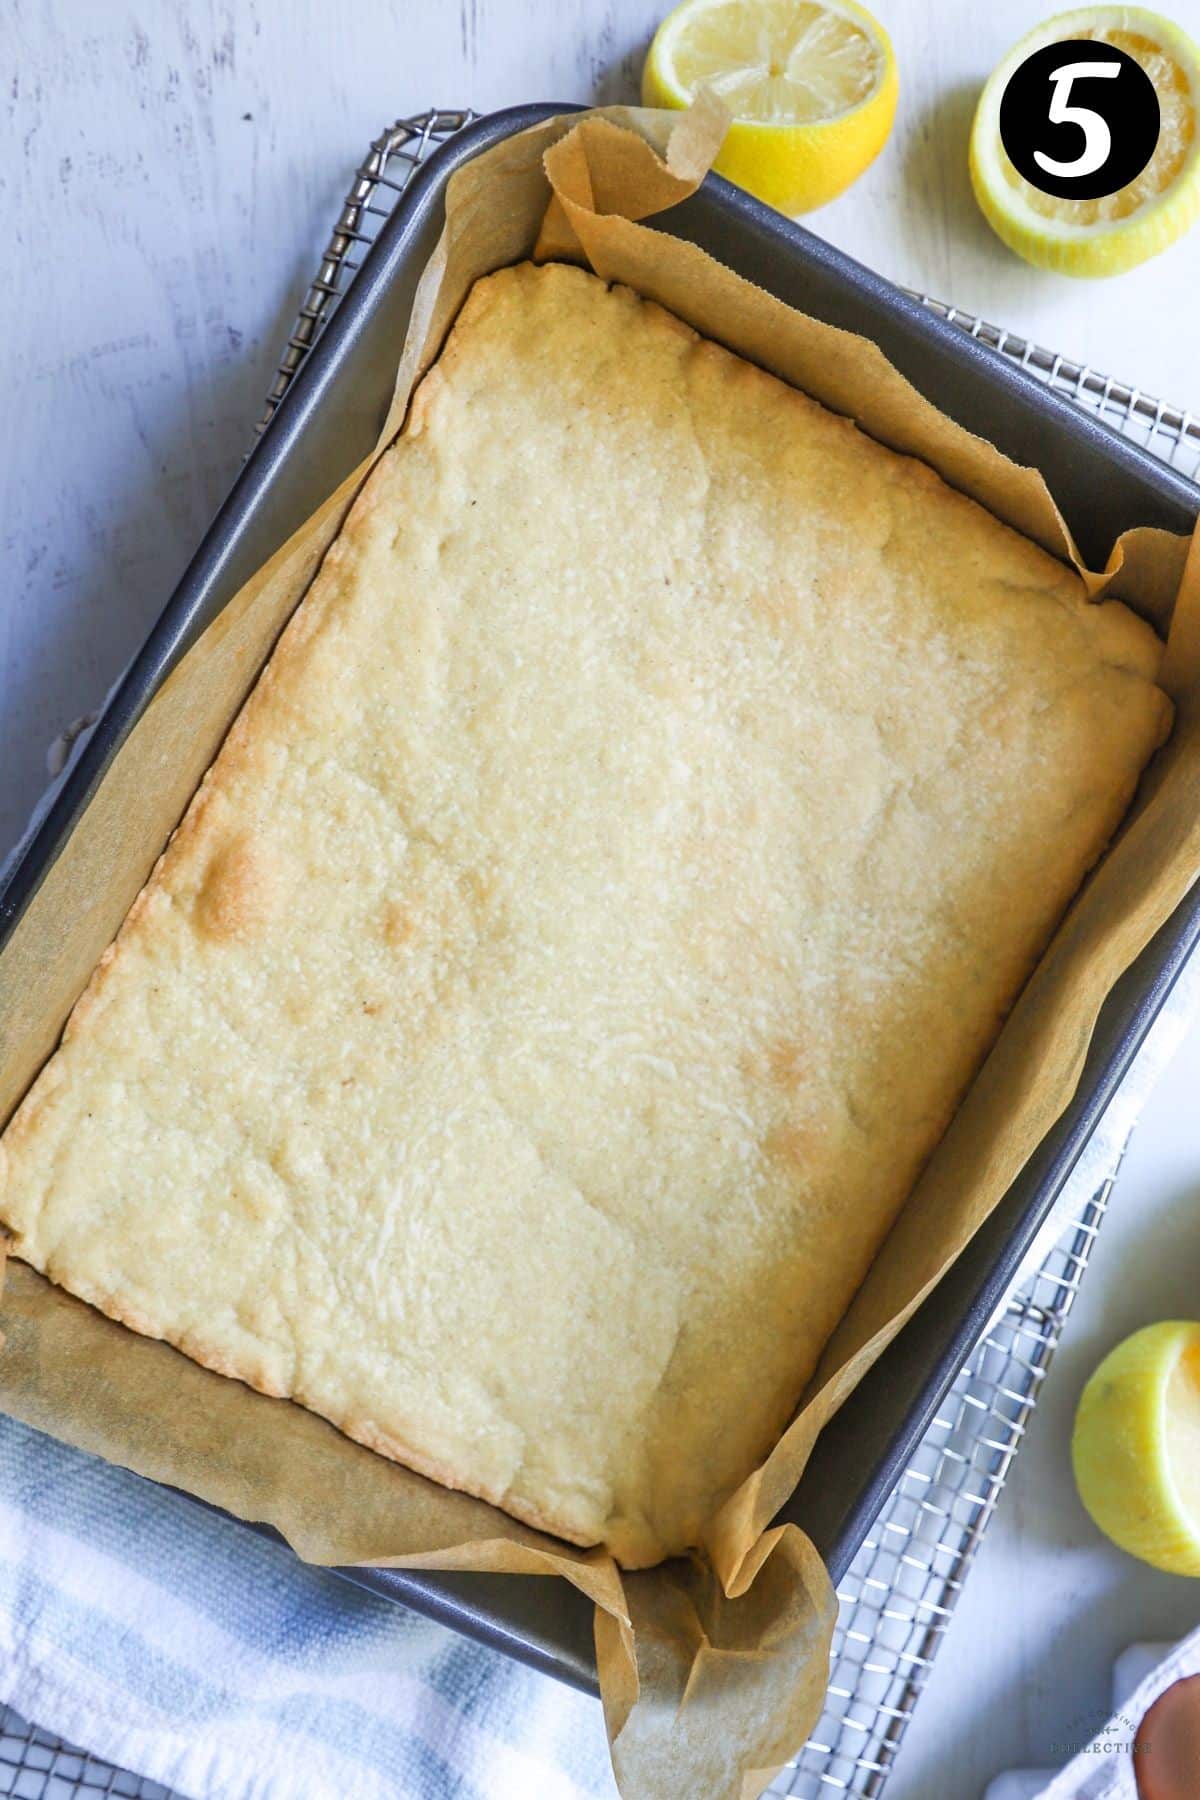 baked shortbread crust in a baking tray